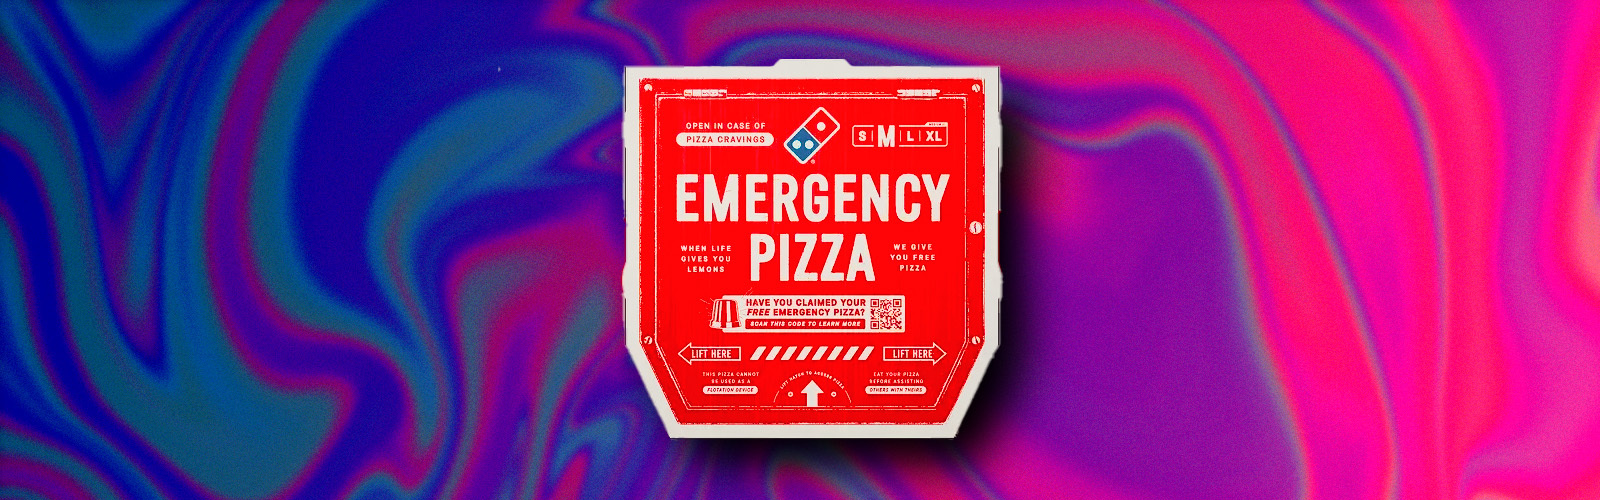 Emergency Pizza